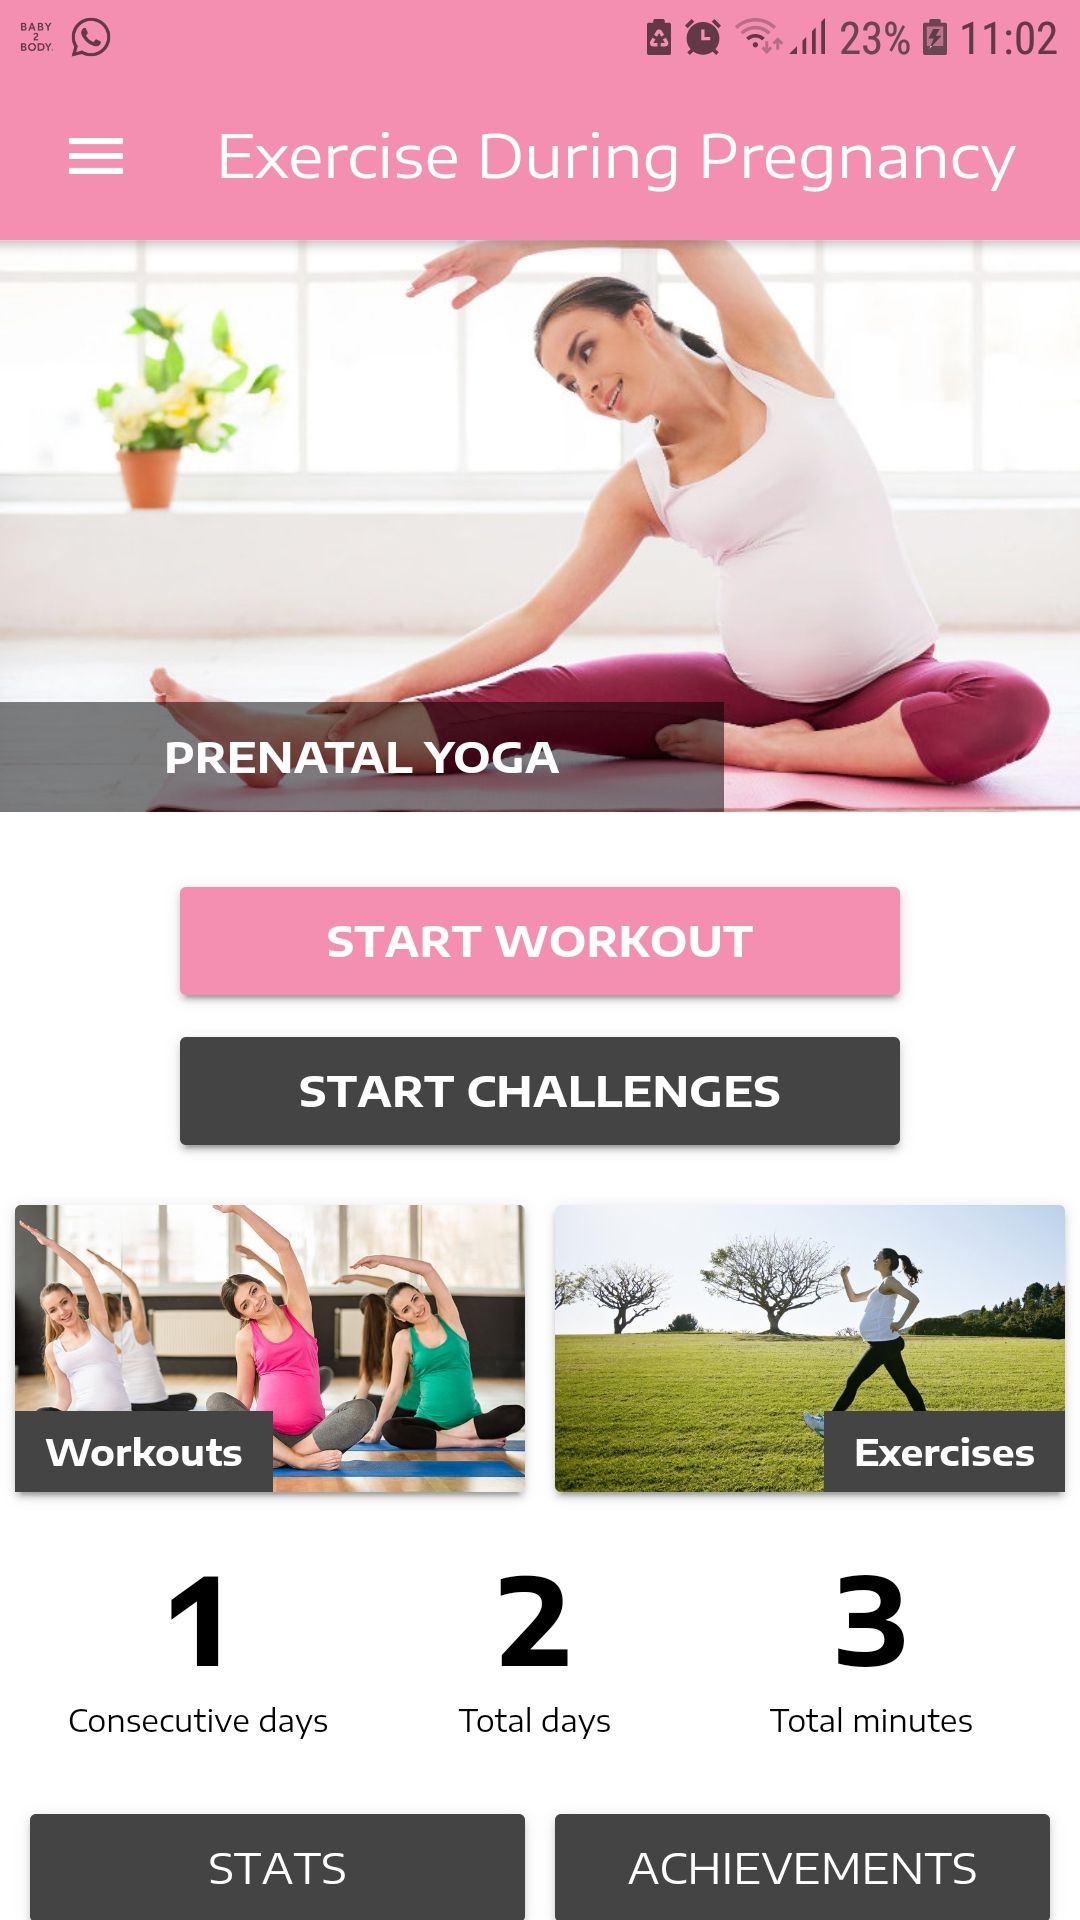 Exercise During Pregnancy mobile prenatal app